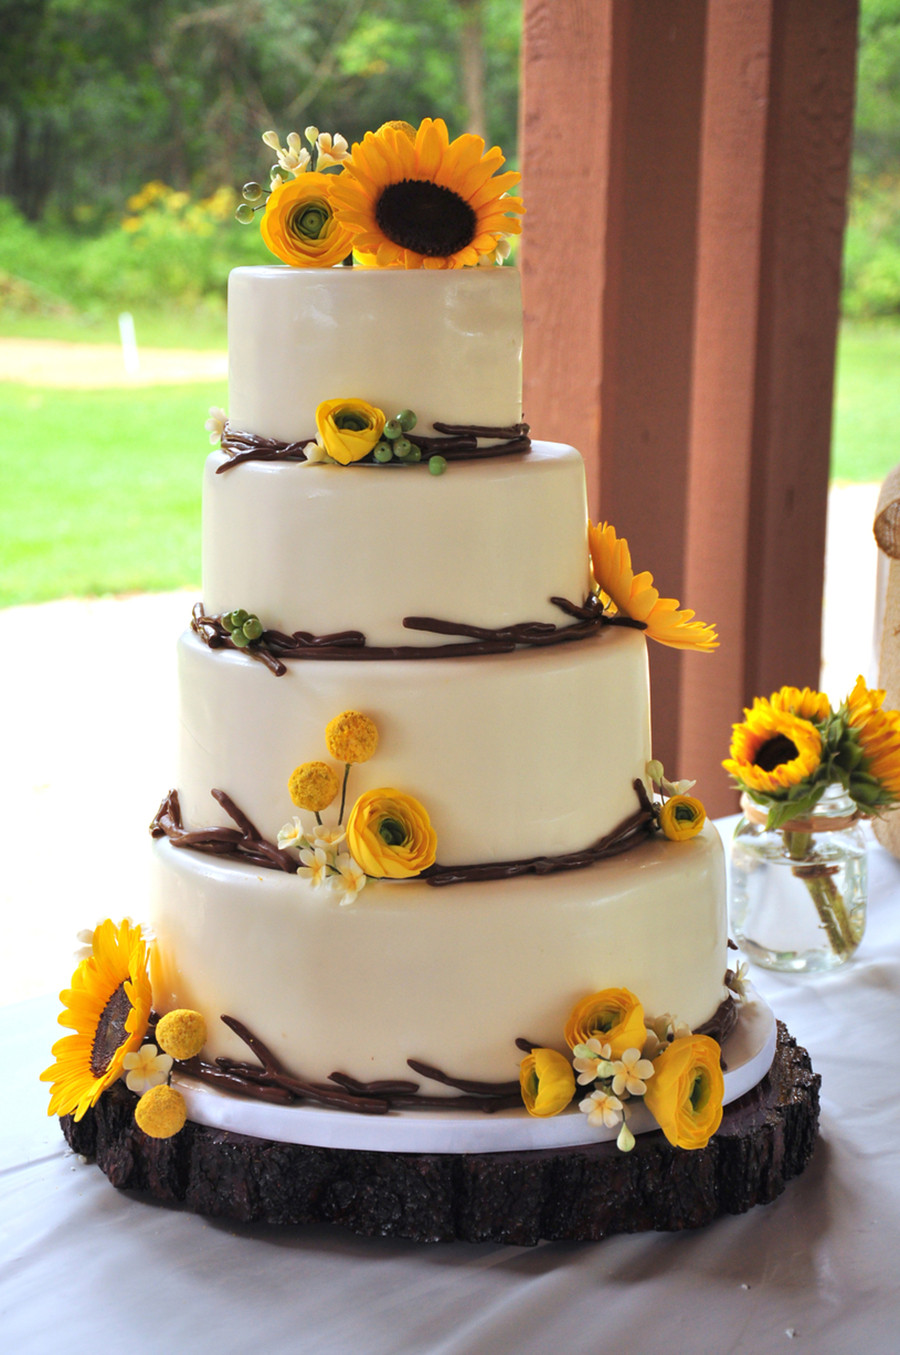 Outdoor Wedding Cakes
 Modern Rustic Wedding Cake For An Outdoor Wedding 4 fset